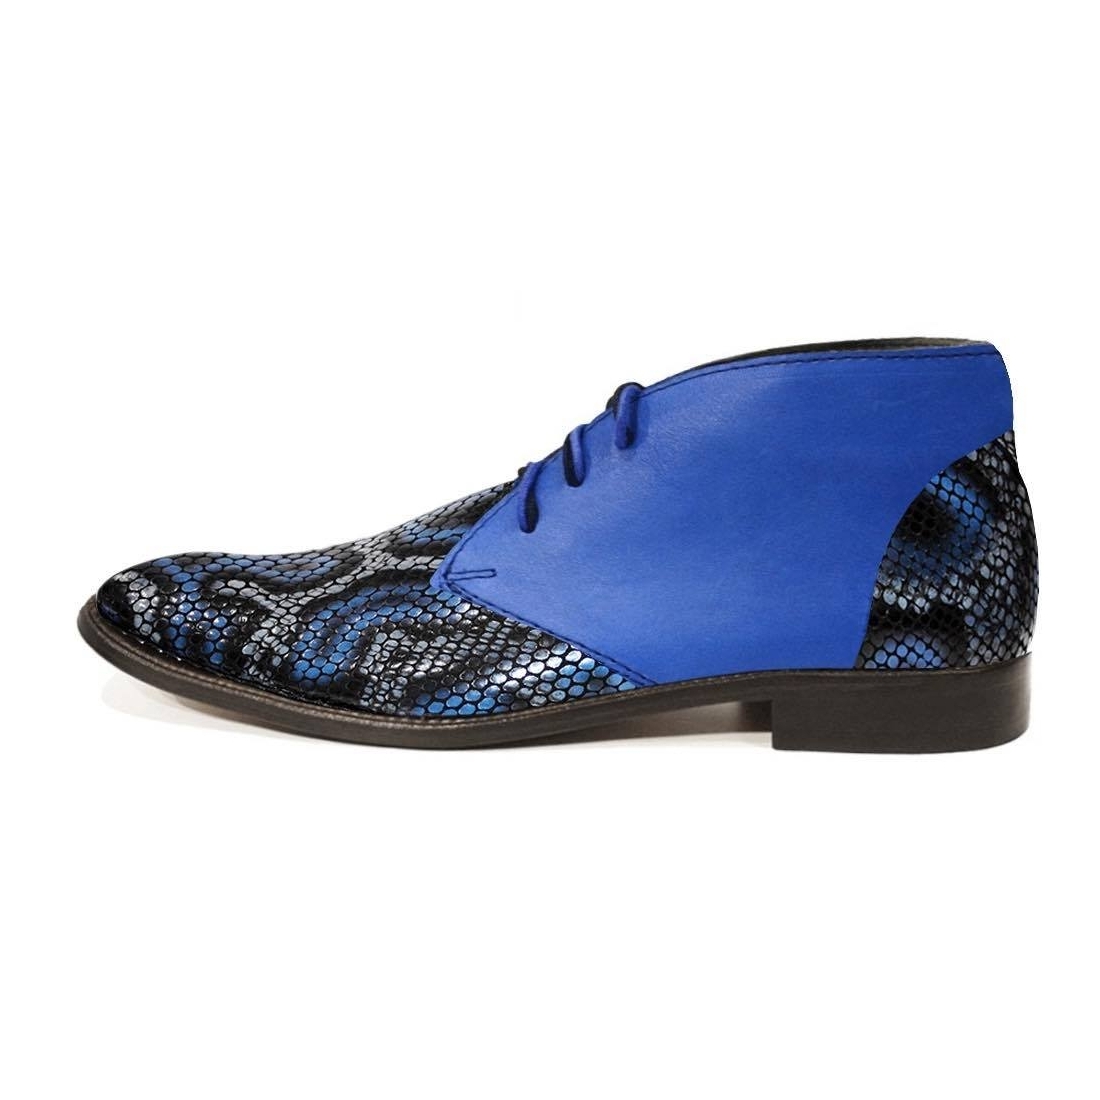 Modello Serpentto - チャッカブーツ - Handmade Colorful Italian Leather Shoes